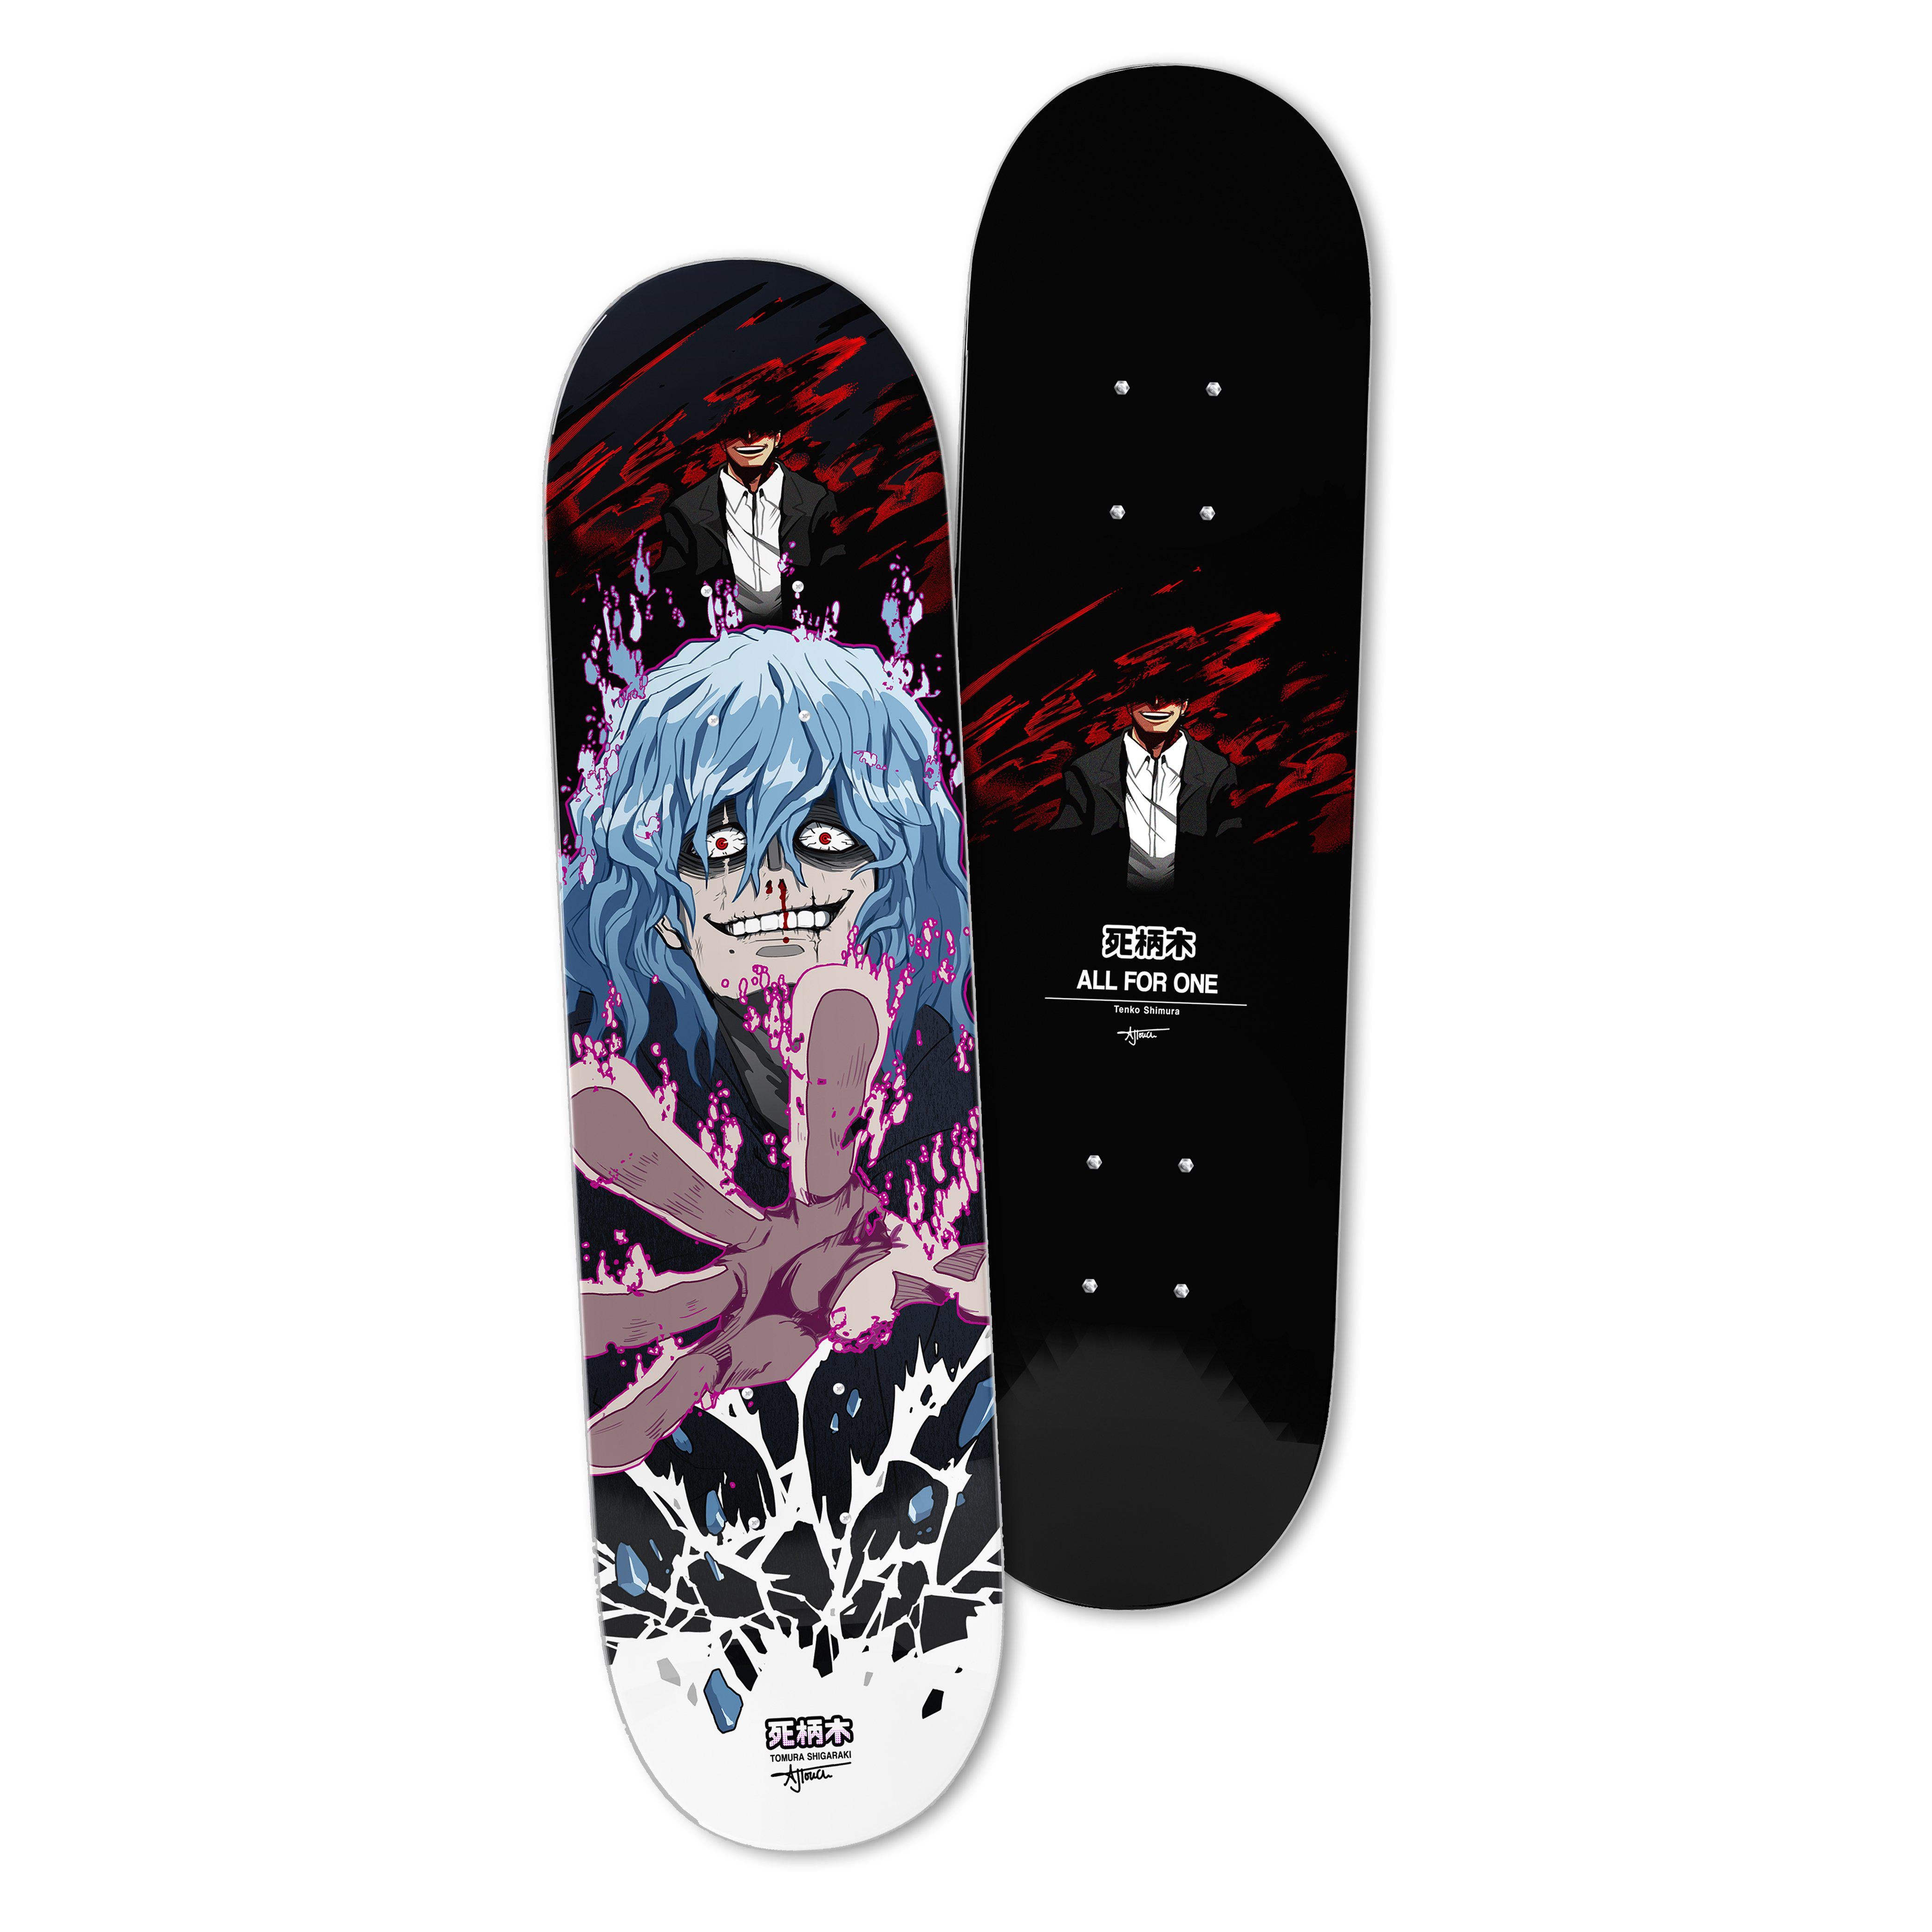 Mr. | Marina skateboard deck (2021) | Available for Sale | Artsy